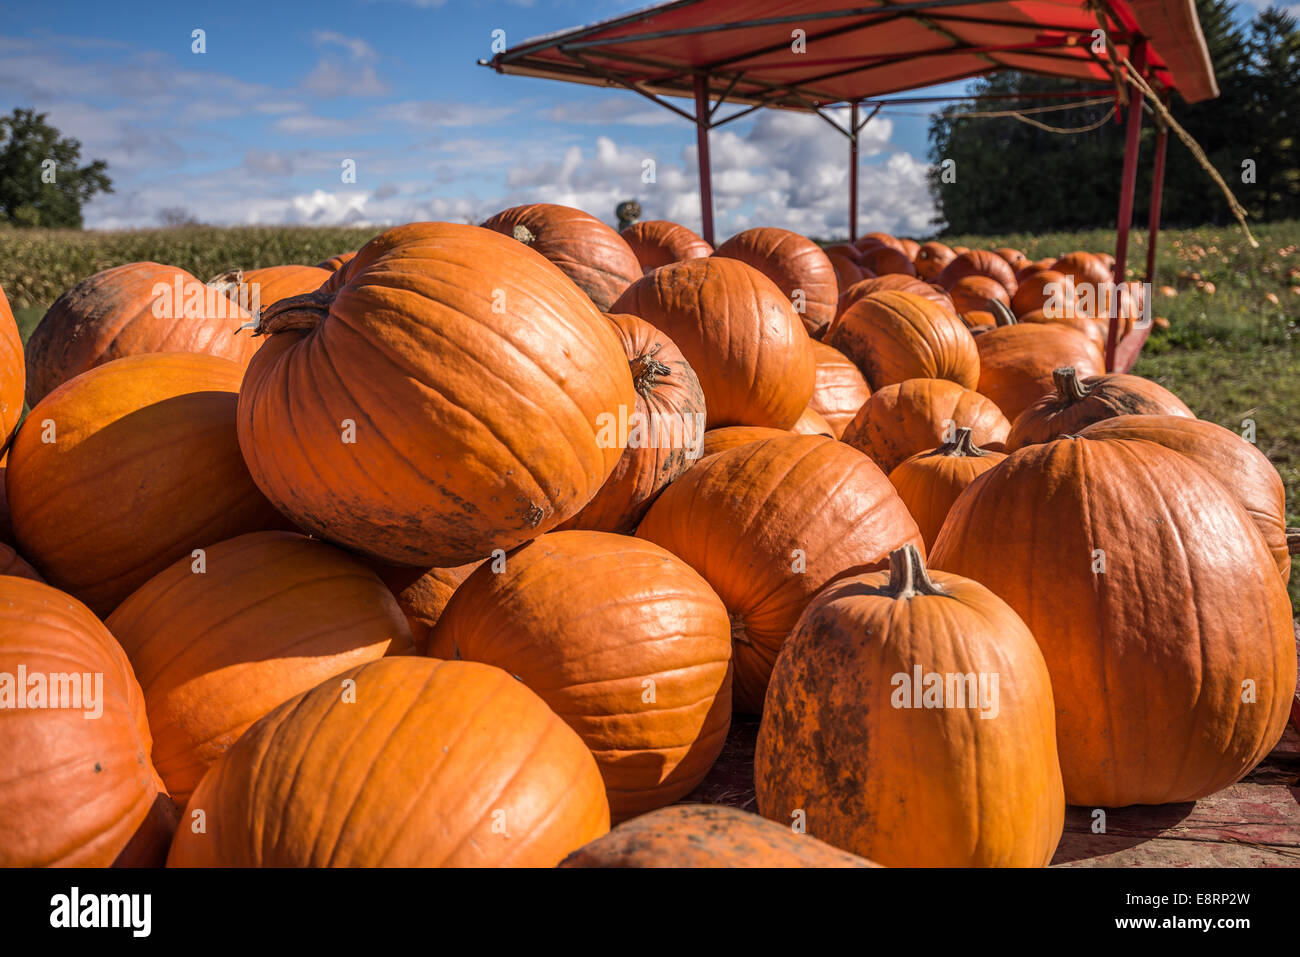 Sunlit pumpkins on a cart in a farmers field. Stock Photo